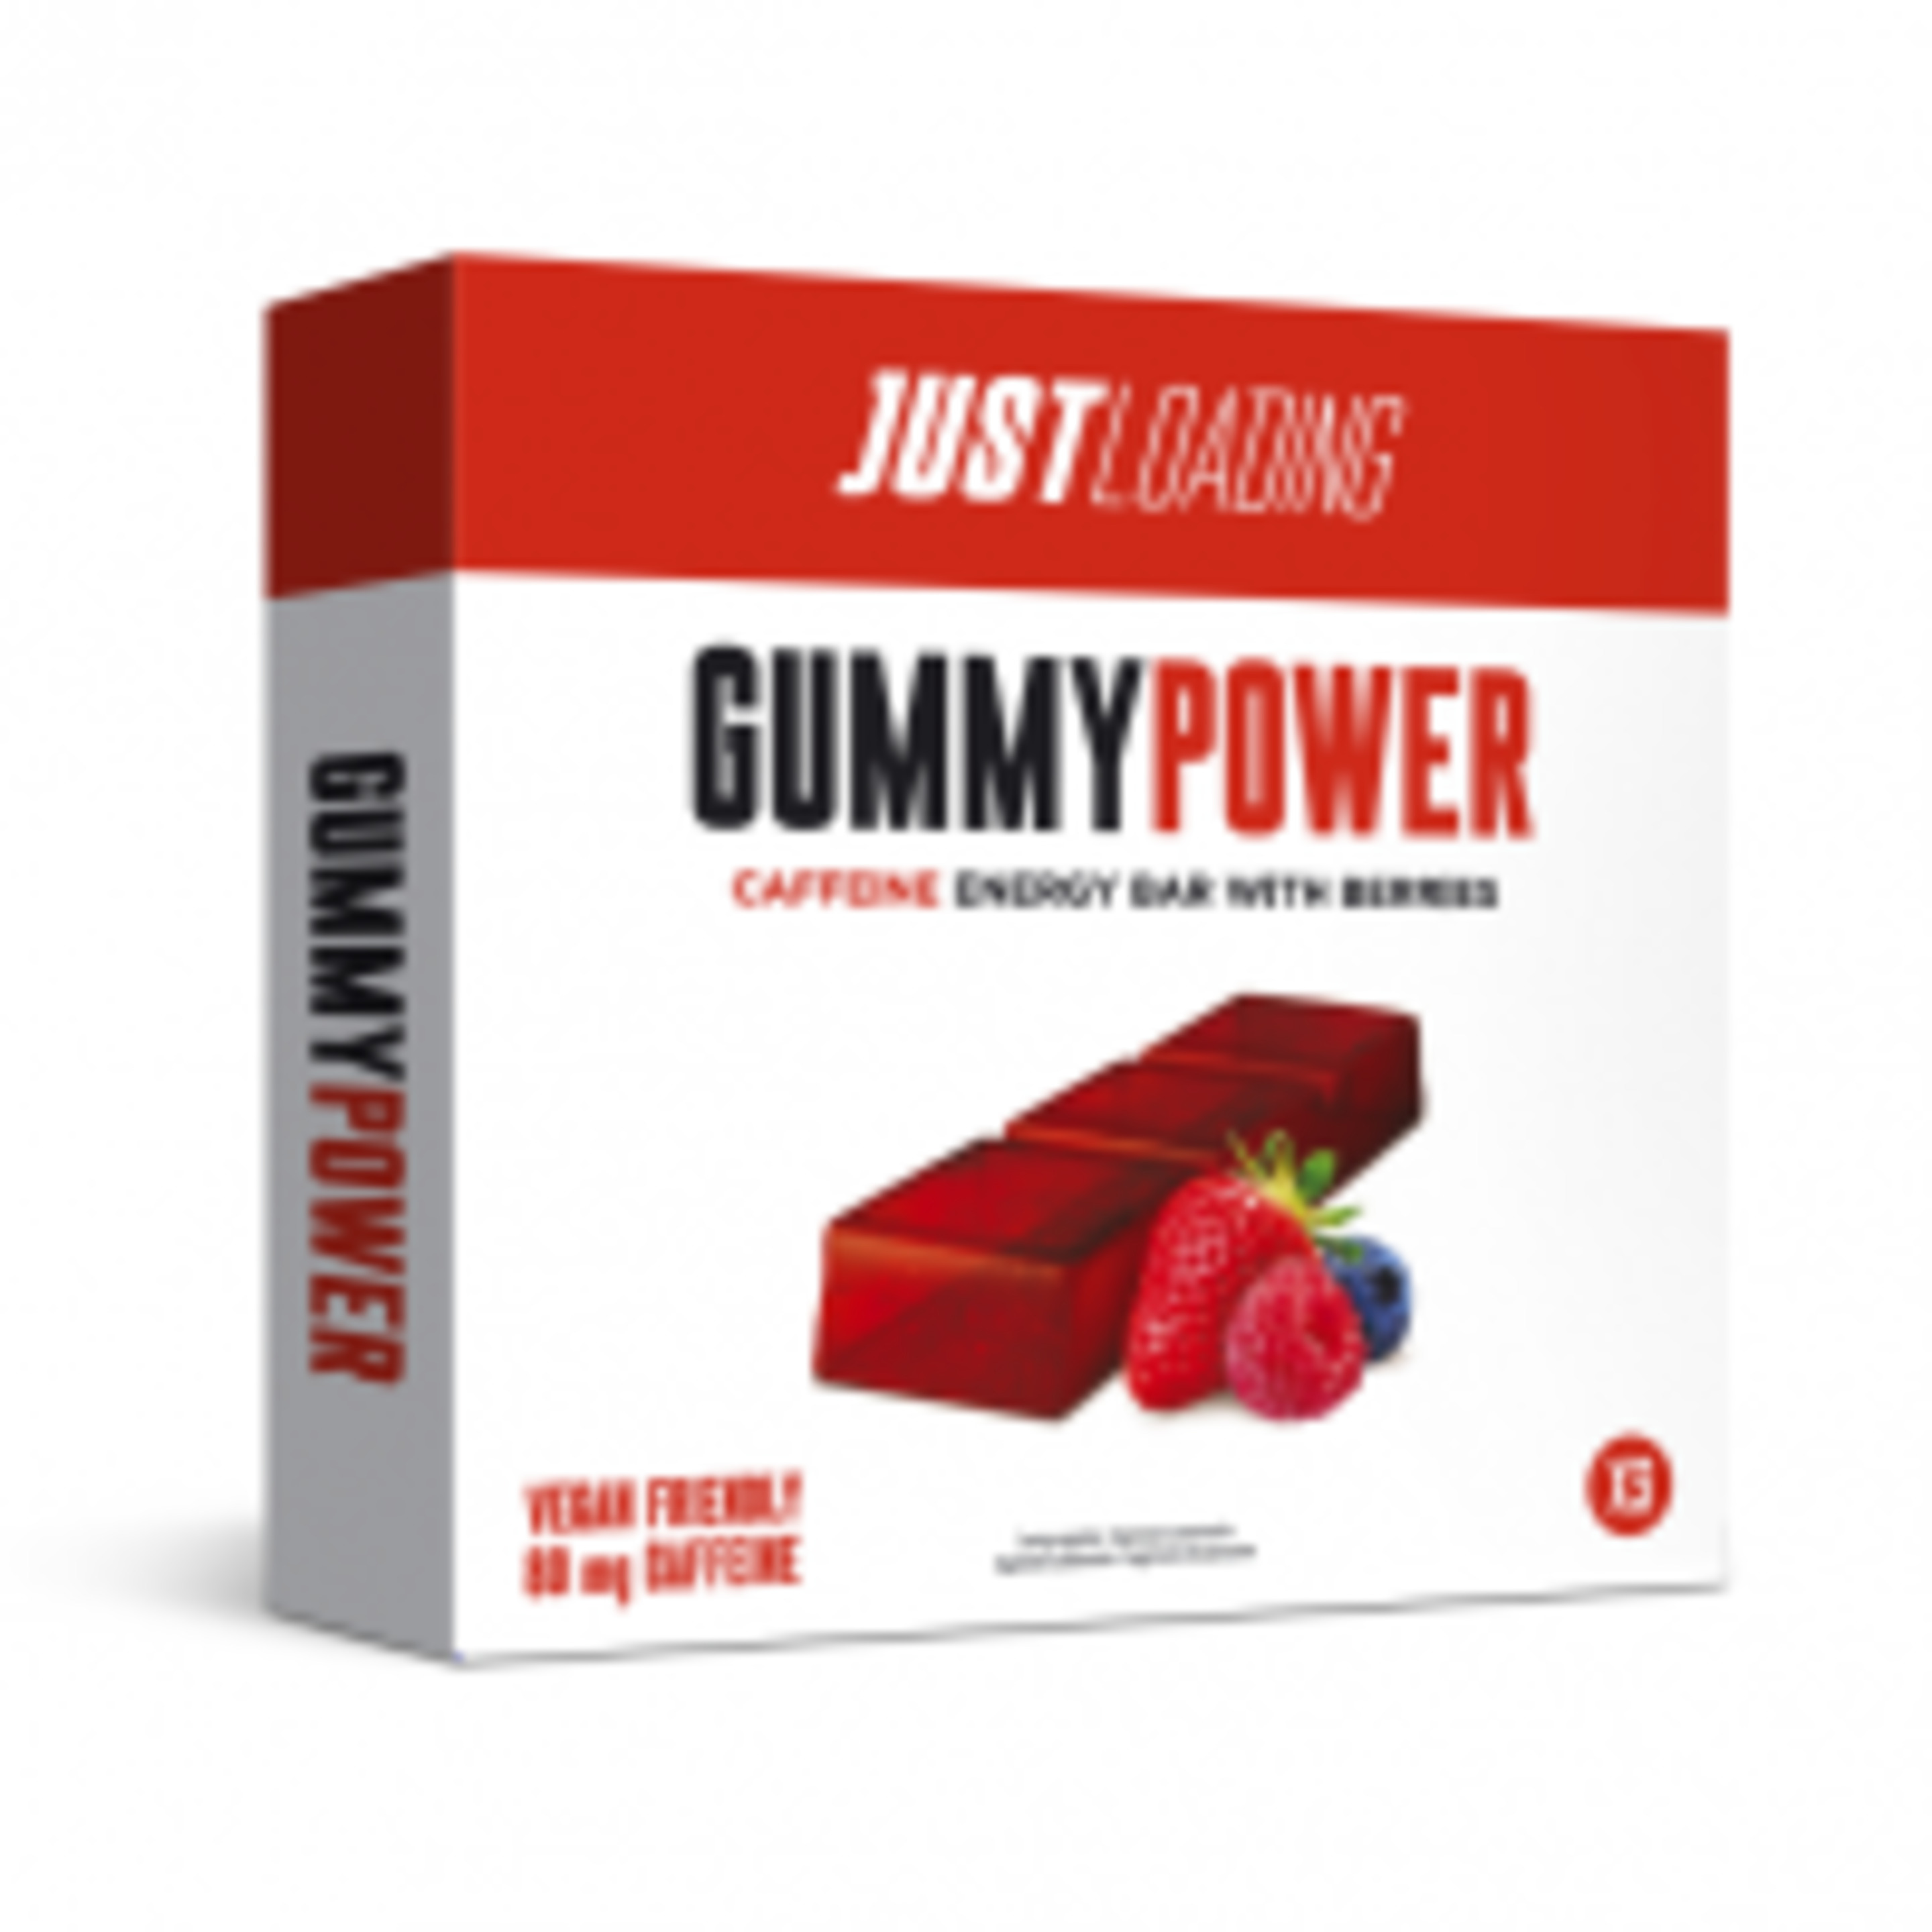 Barrita Energética Gummypower Justloading - Sabor Frutos Rojos  MKP